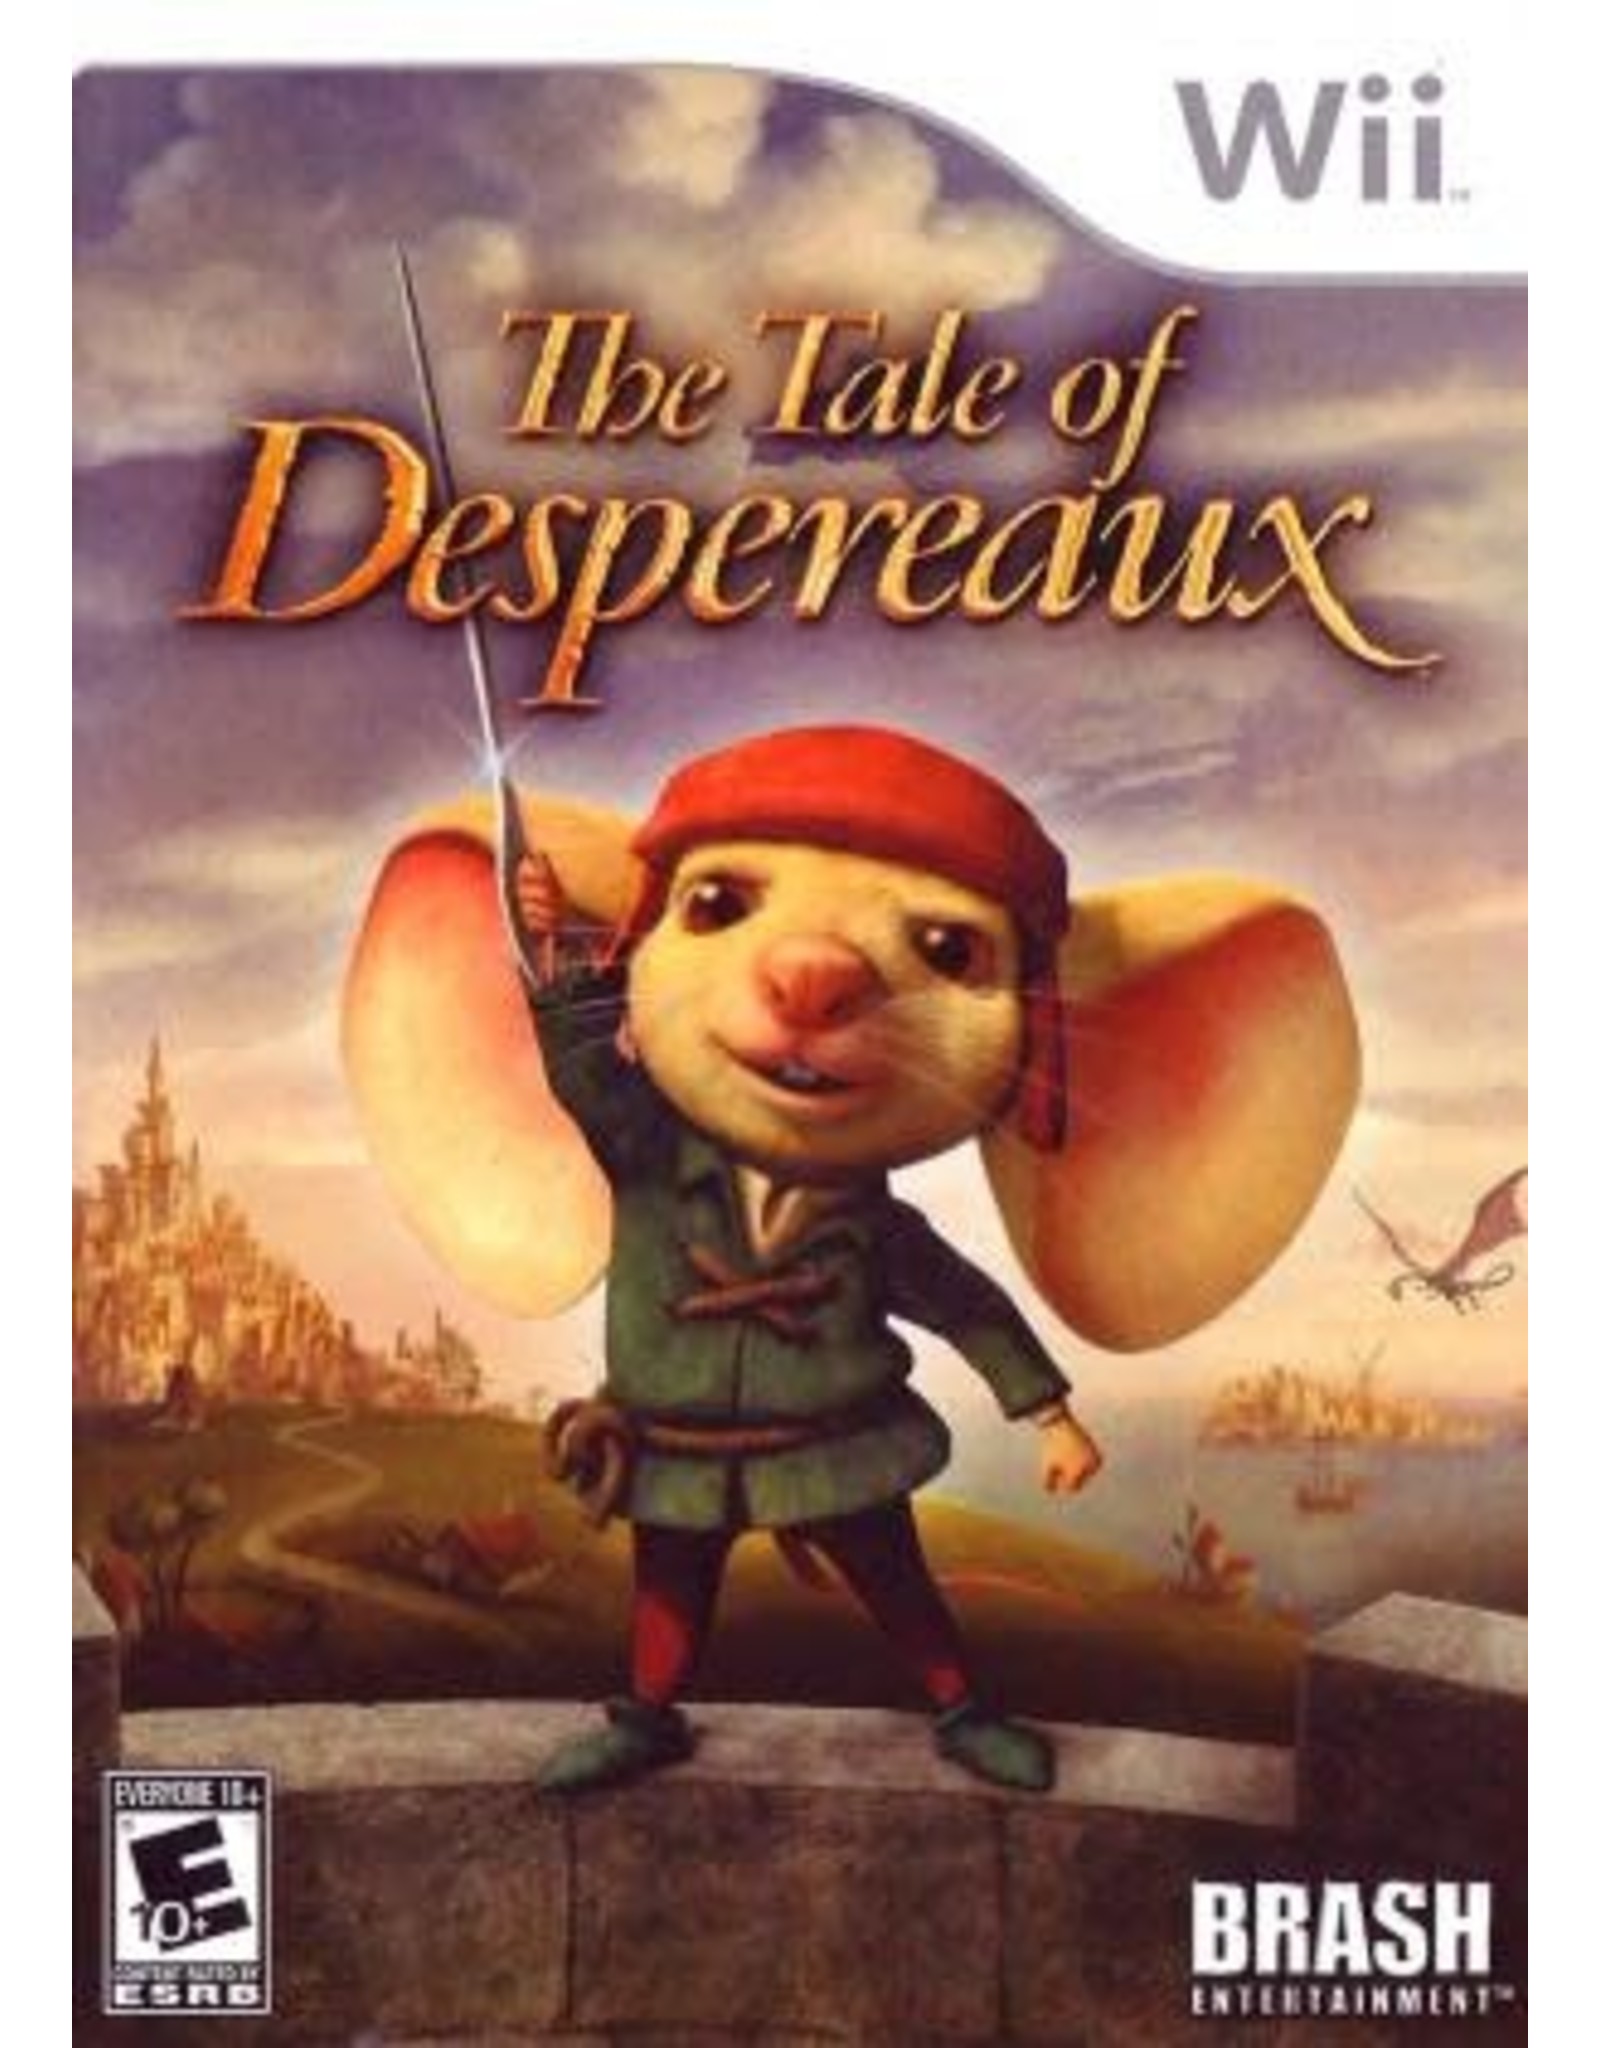 Wii Tale of Despereaux, The (No Manual)